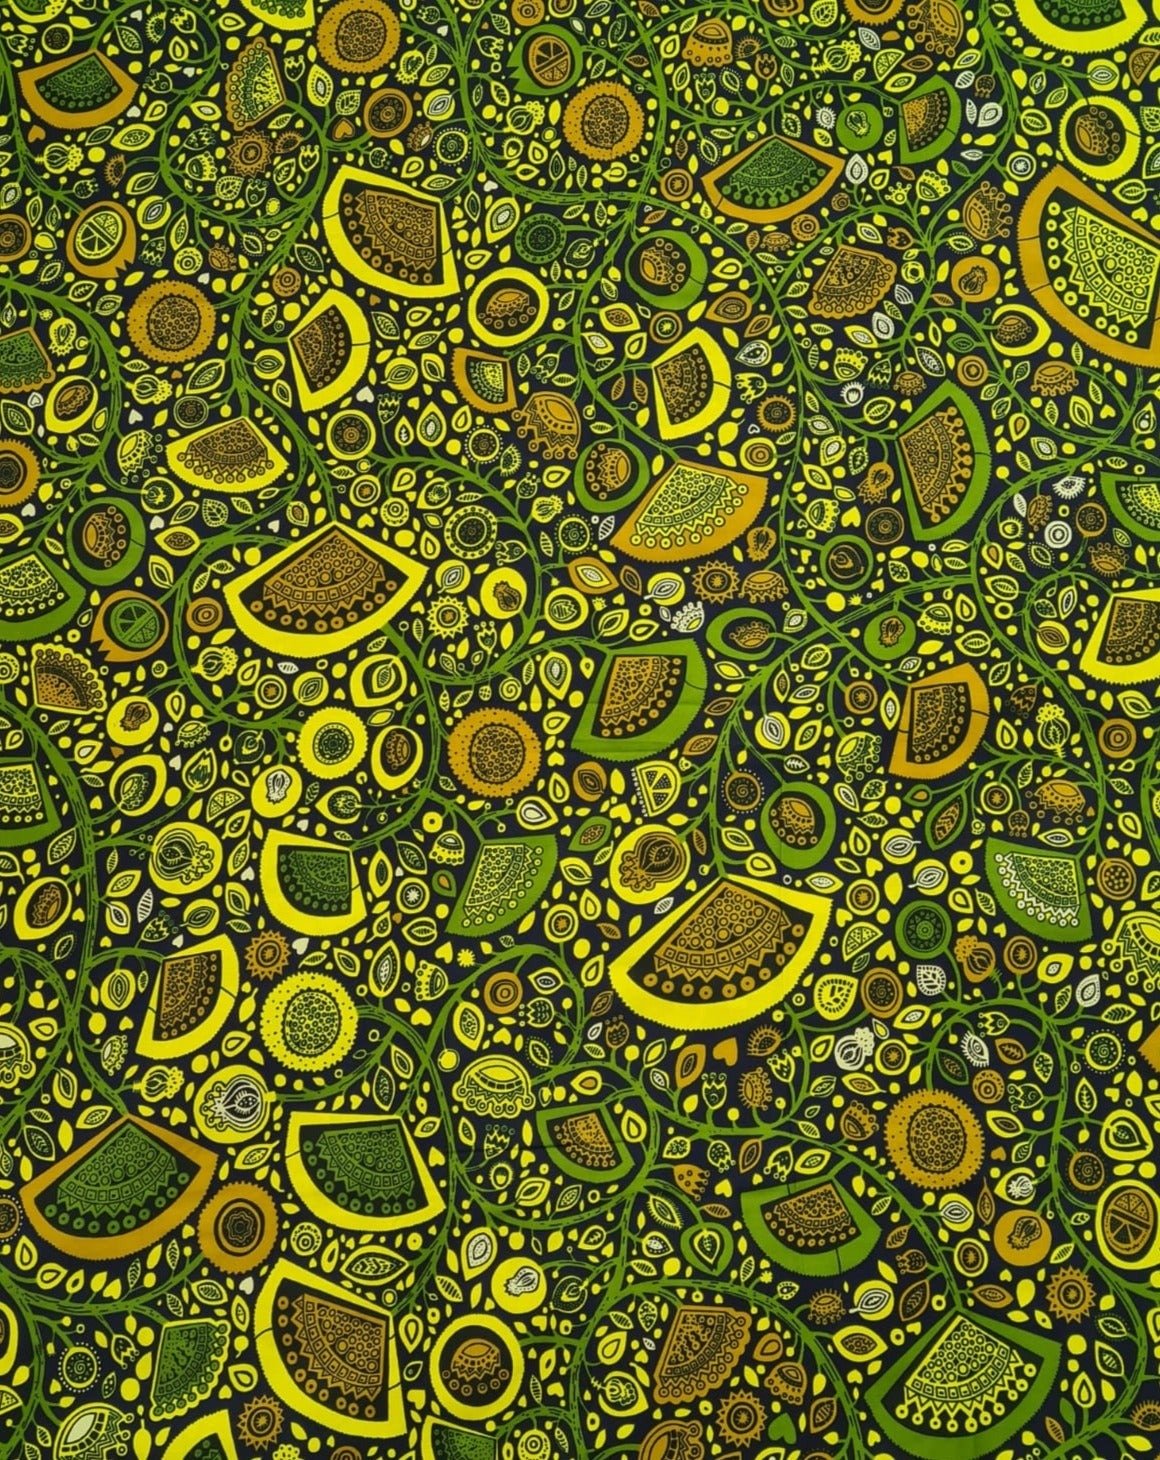 Green and Yellow Ankara Fabric - ak6100 - House of Prints